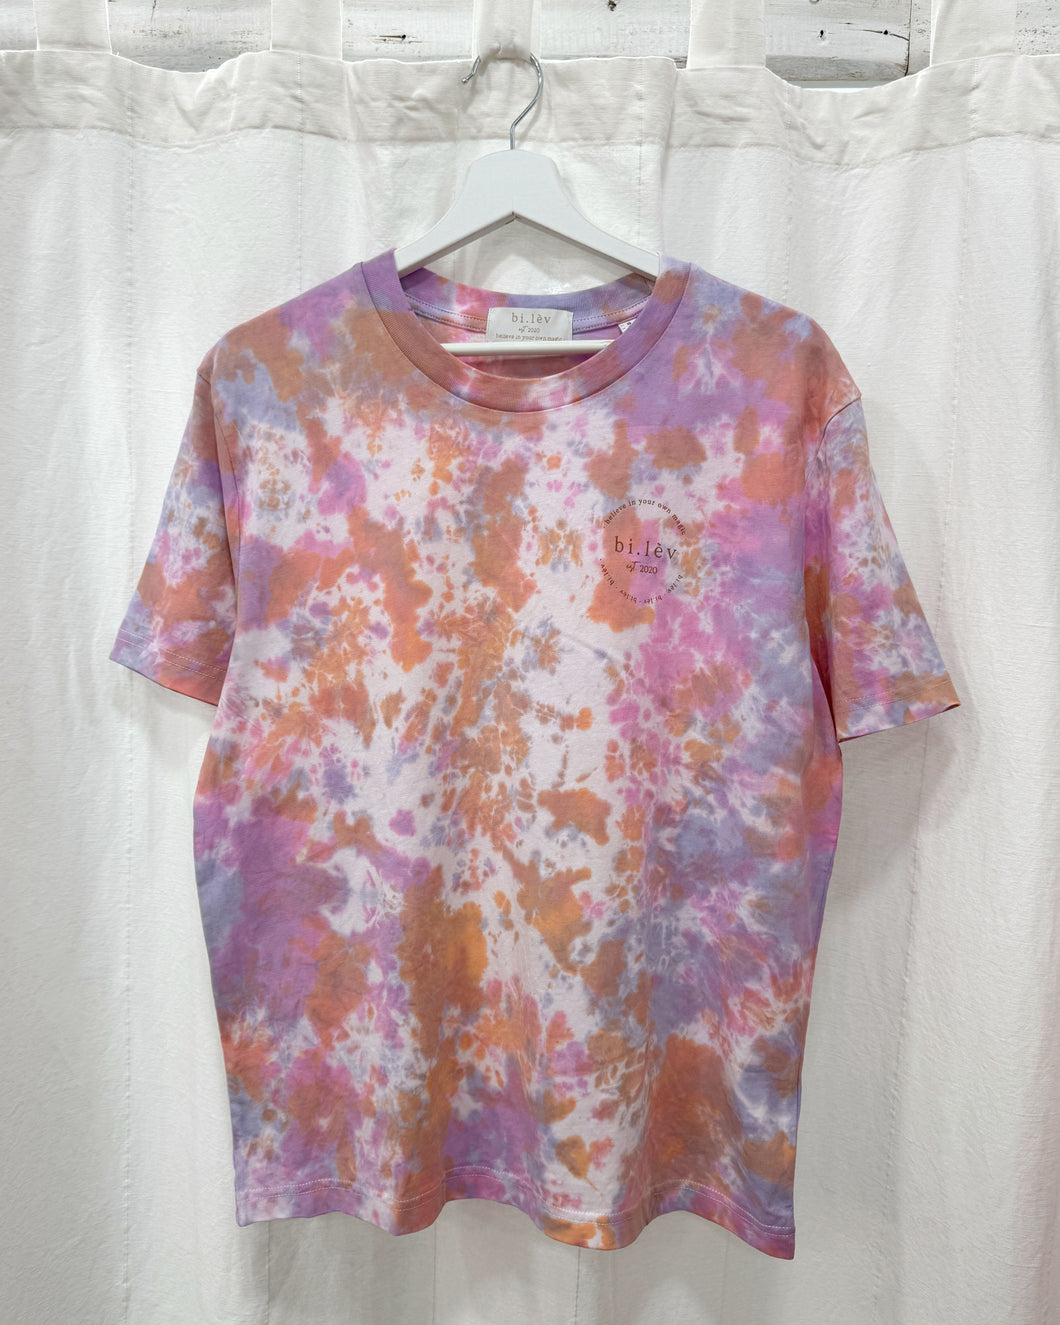 GLORY - Tie Dye Organic Cotton T-shirt